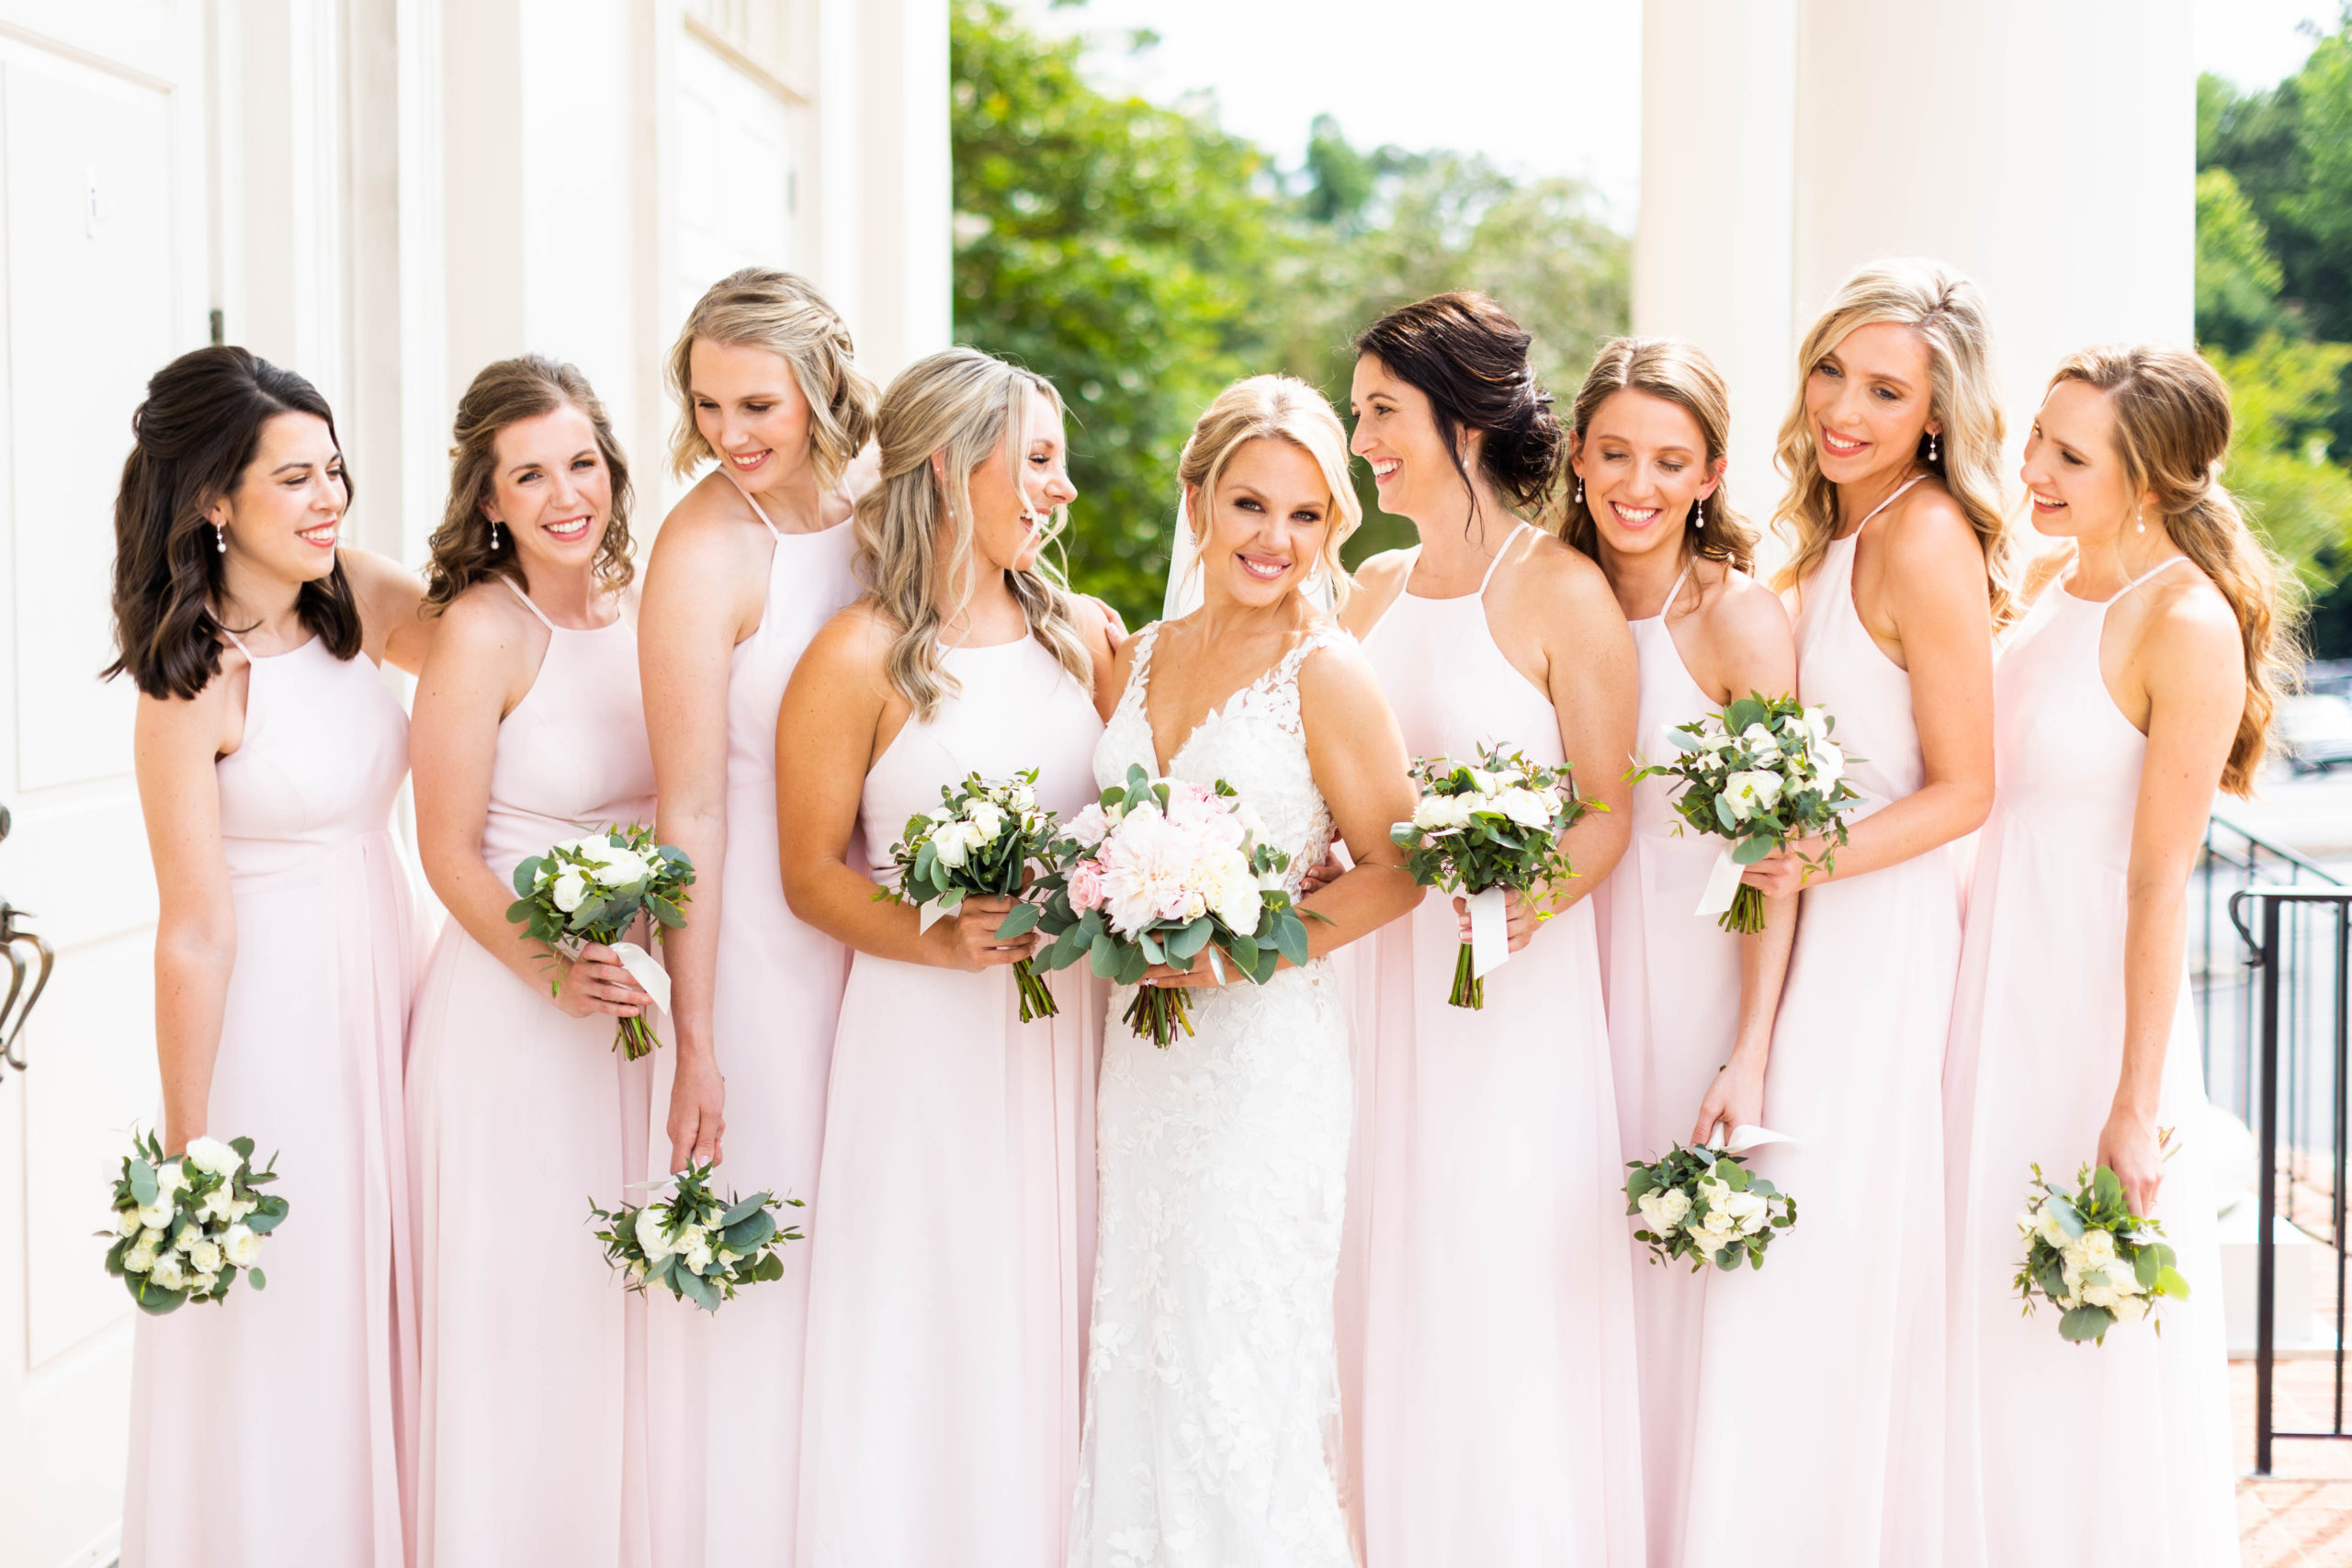 Eleanor Stenner Photography - a Birmingham, AL wedding photographer - shares where to buy bridesmaid dresses online